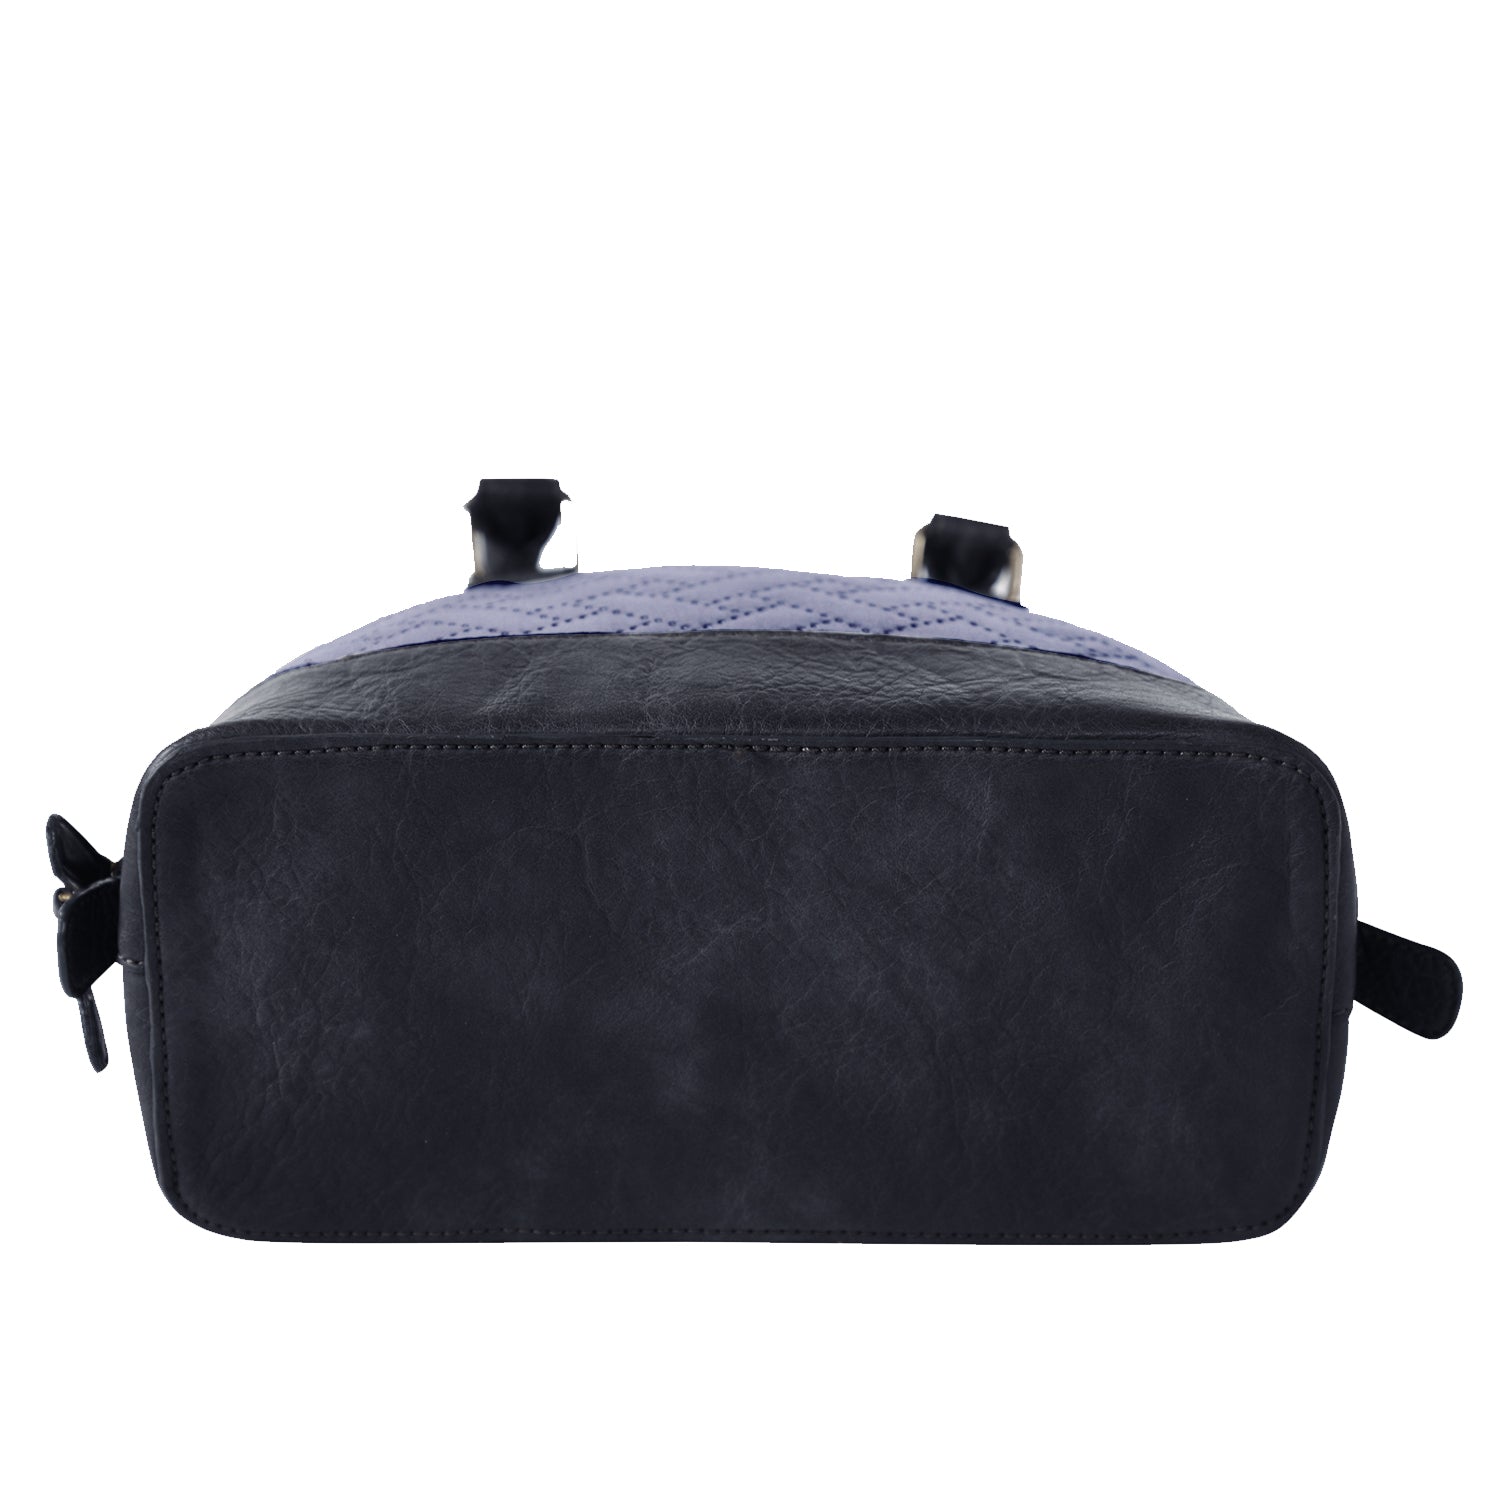 Mona B Small Handbag, Shoulder Bags For Shopping Travel With Stylish Design For Women: NAV - QRP-301 NAV - Handbag by Mona-B - Backpack, Flash Sale, Flat50, New Arrivals, Sale, Shop1999, Shop2999, Shop3999